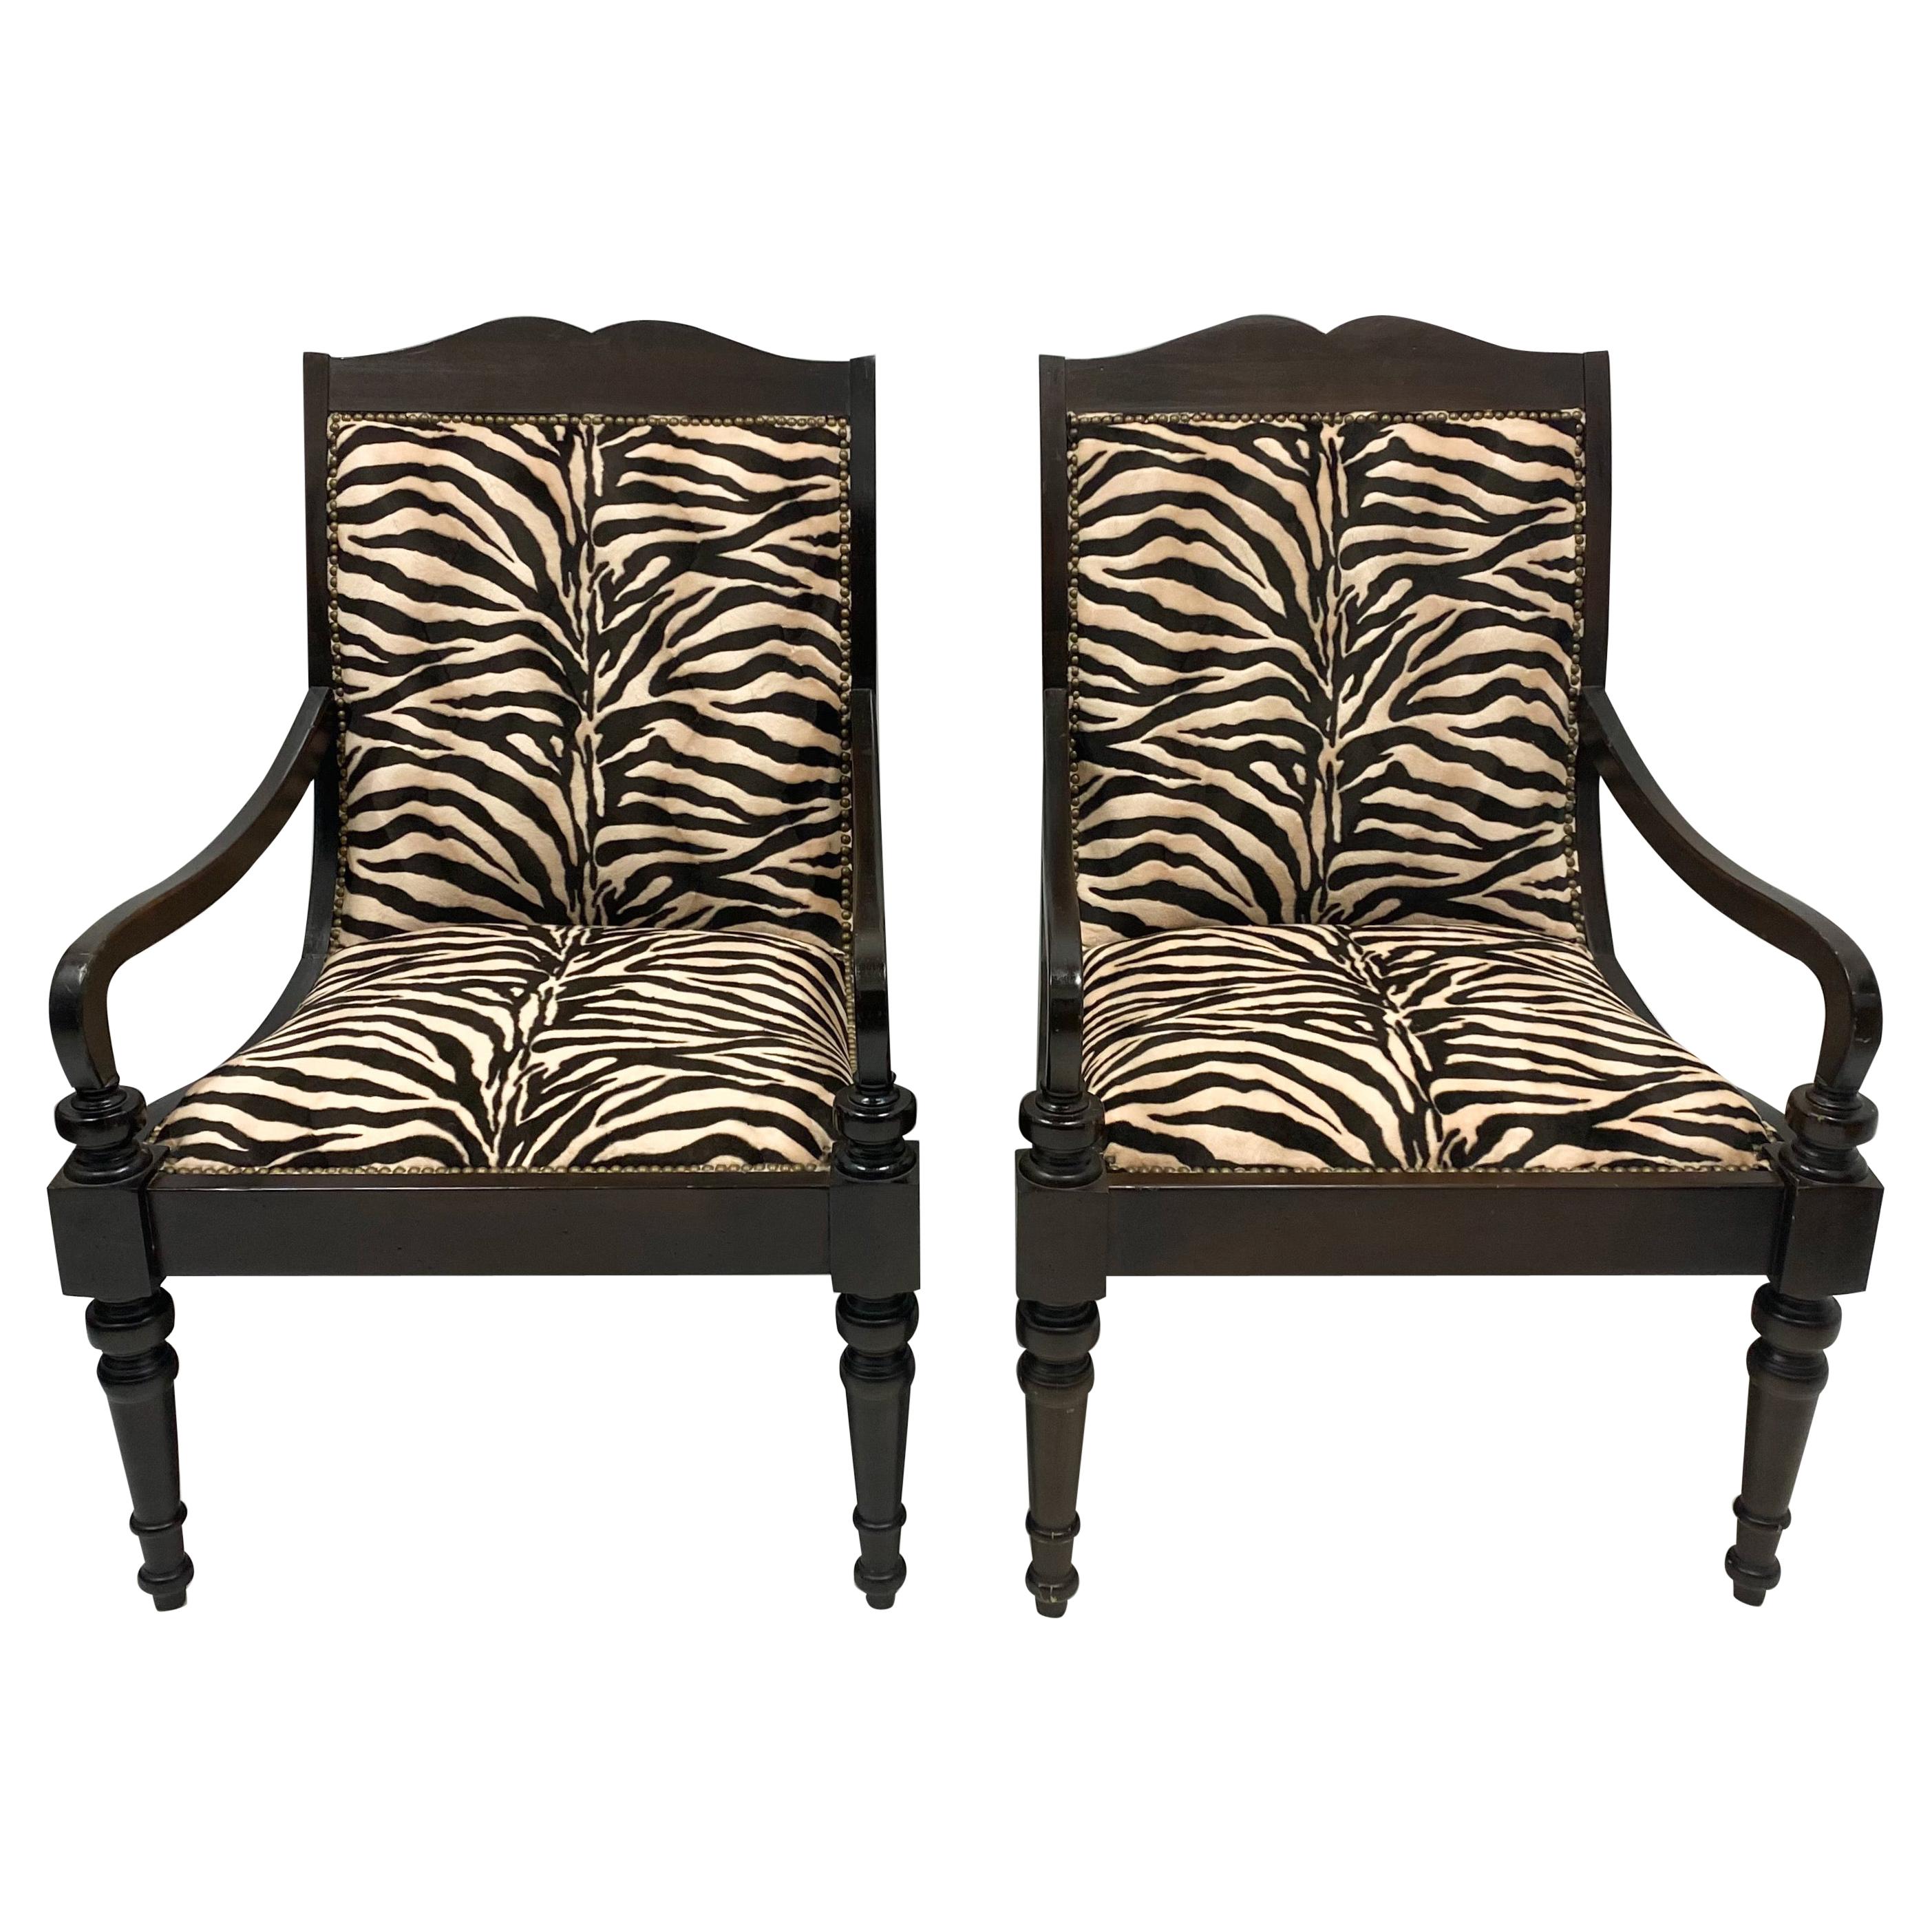 Ebonized British Colonial Style Lillian August Chairs in Zebra Velvet, Pair